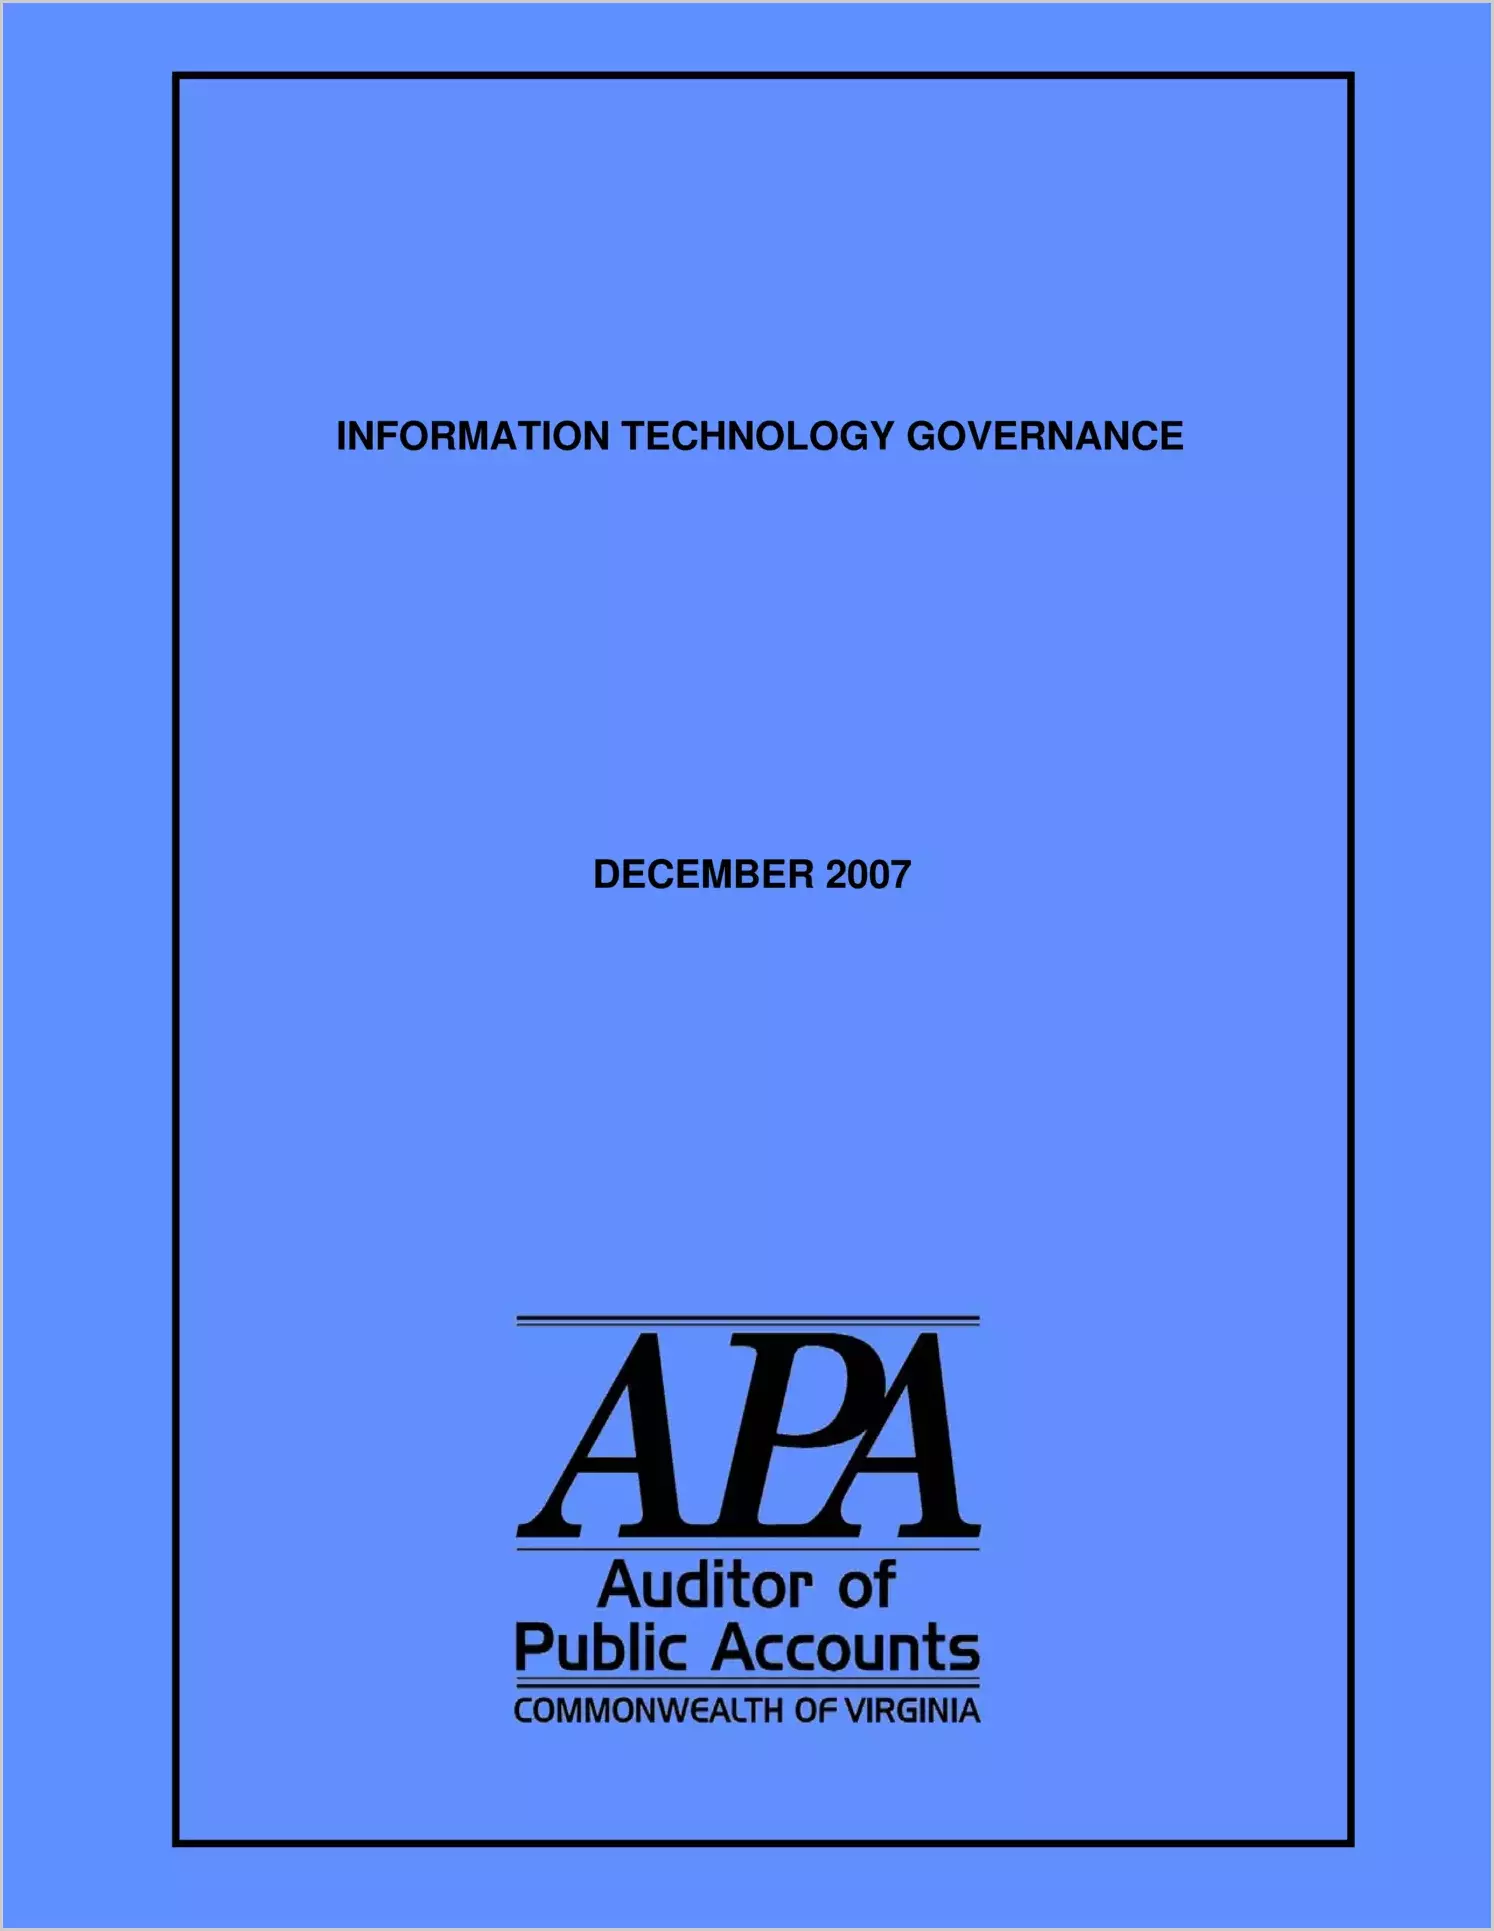 Information Technology Governance - December 2007